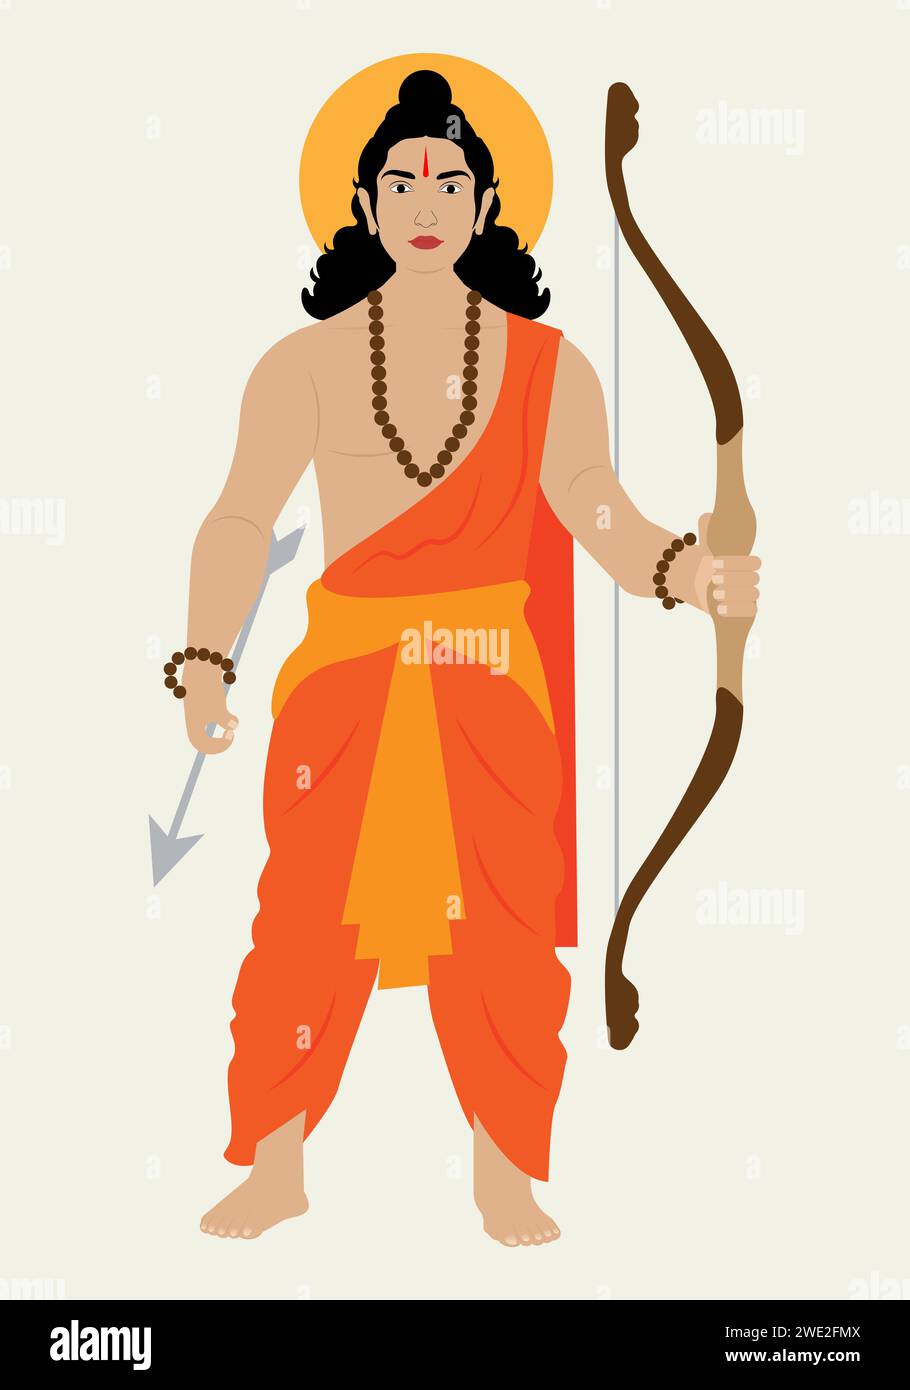 Illustration de Lord Ram avec robe safran tenant Sharanga (arc). Illustration de Vecteur